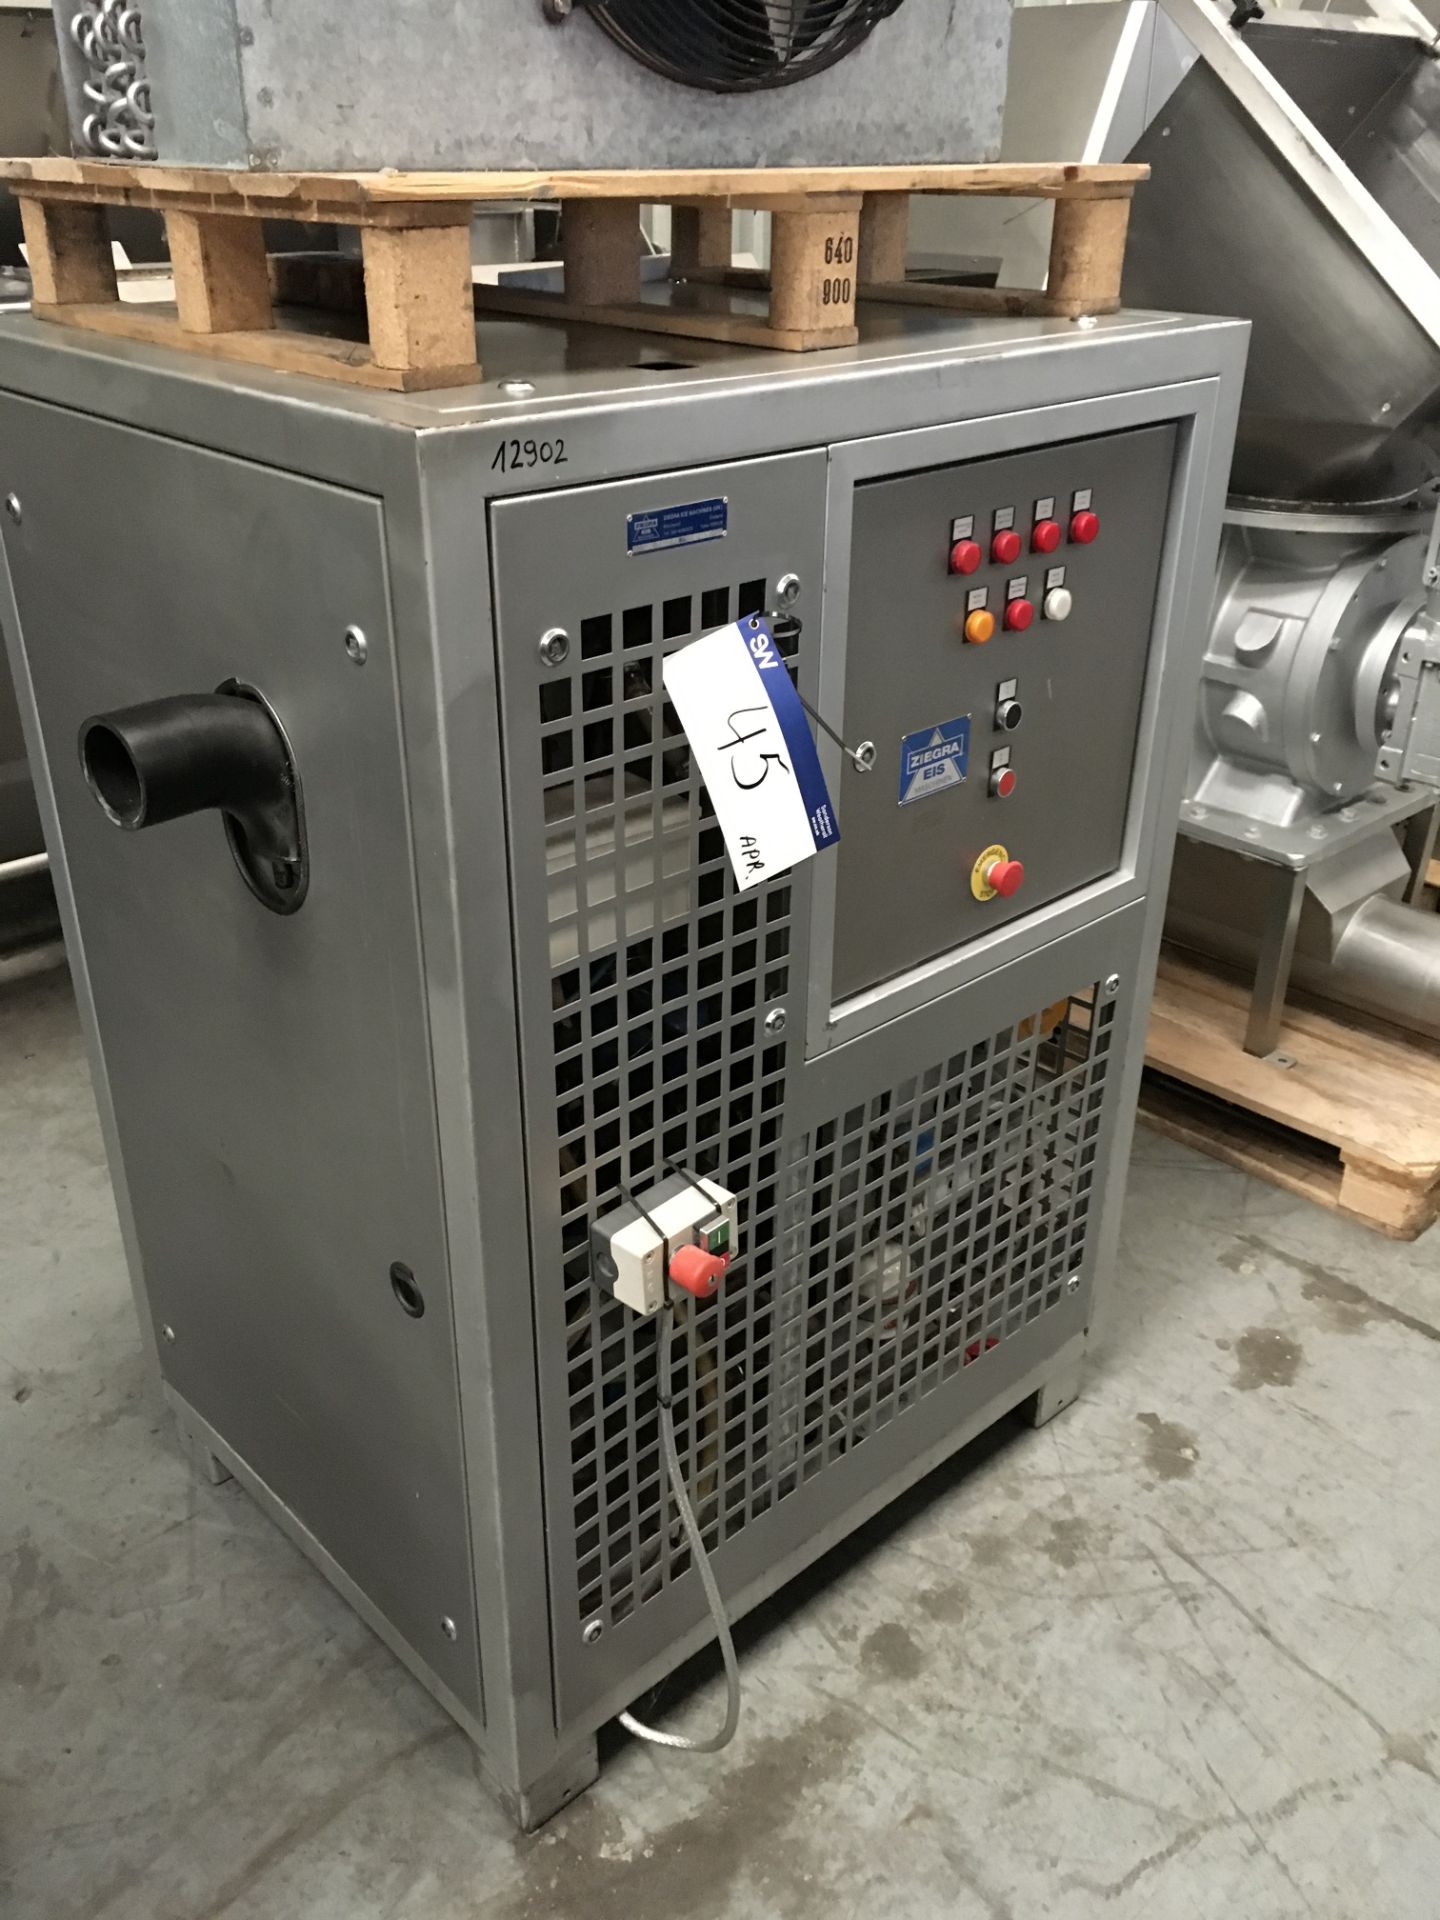 Ziegra UBE 1500FE Ice Flaking Machine, serial no. 916931, approx. 800mm x 1000mm x 1420mm high, £